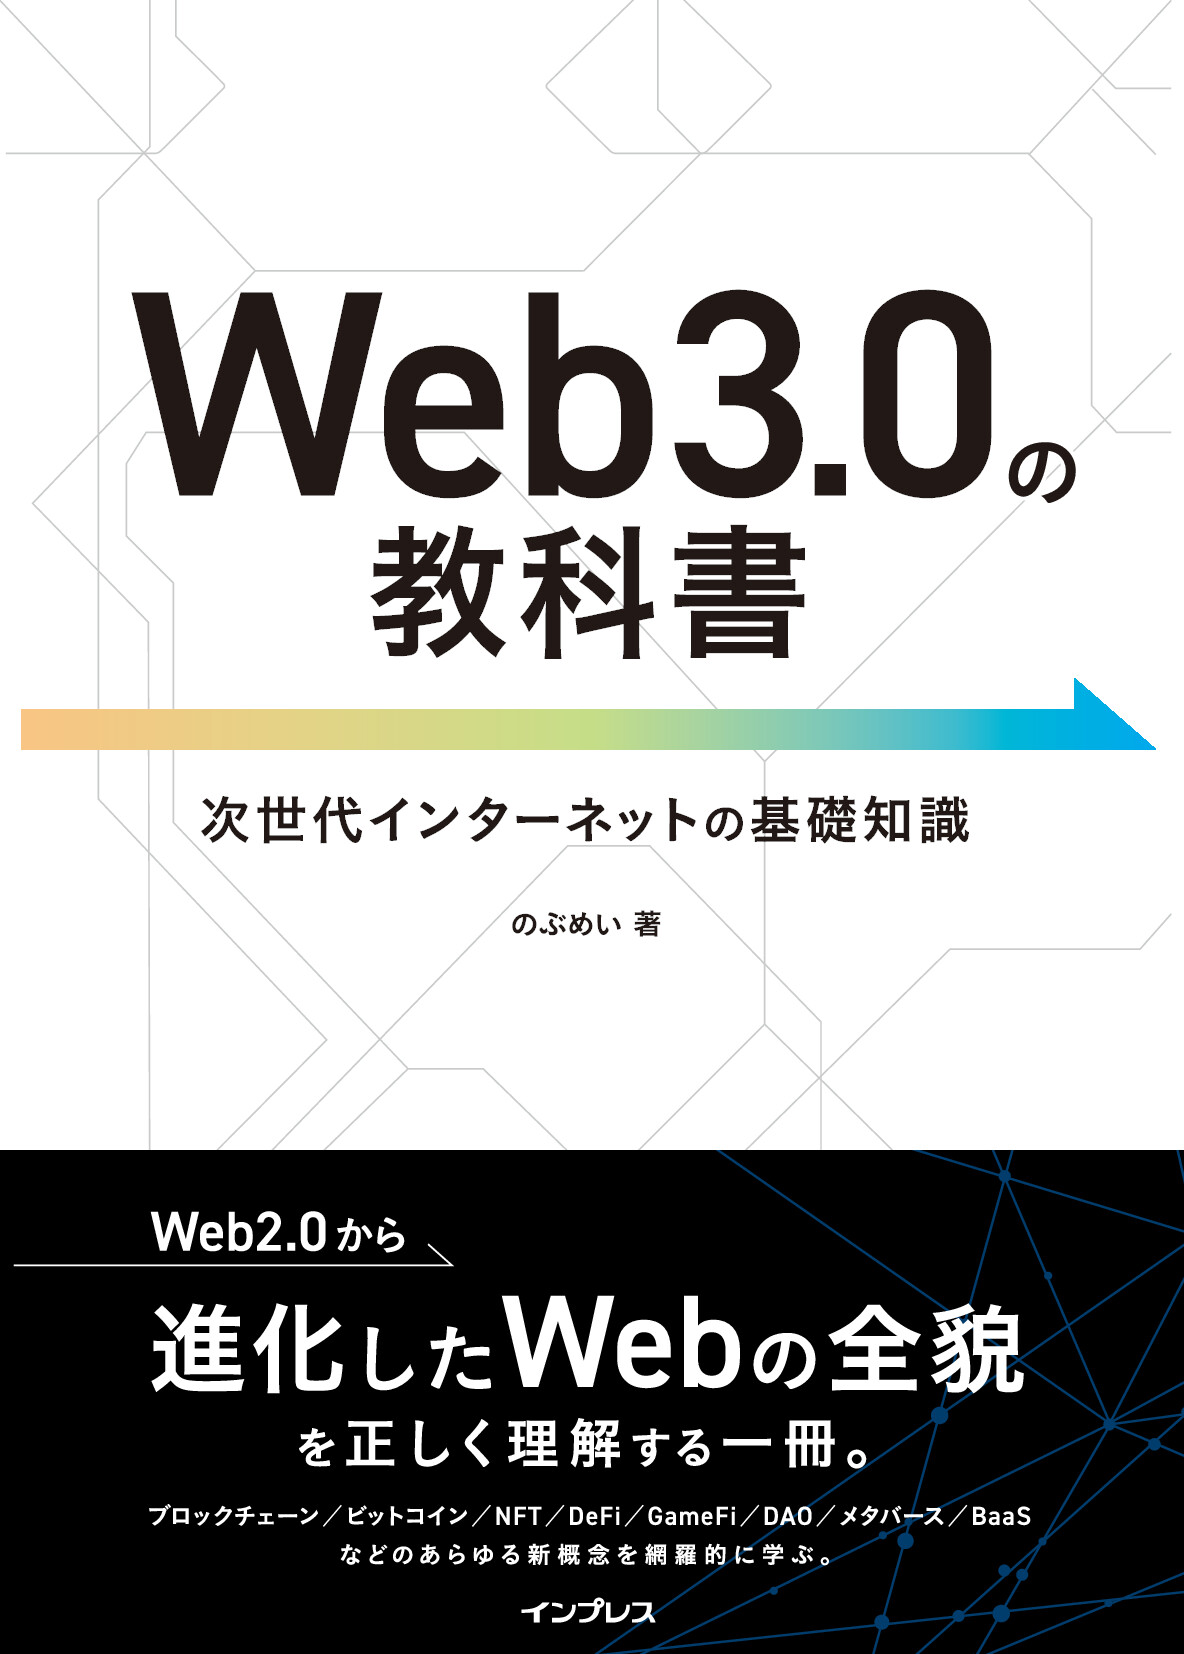 Web3.0の教科書【委託】 達人出版会